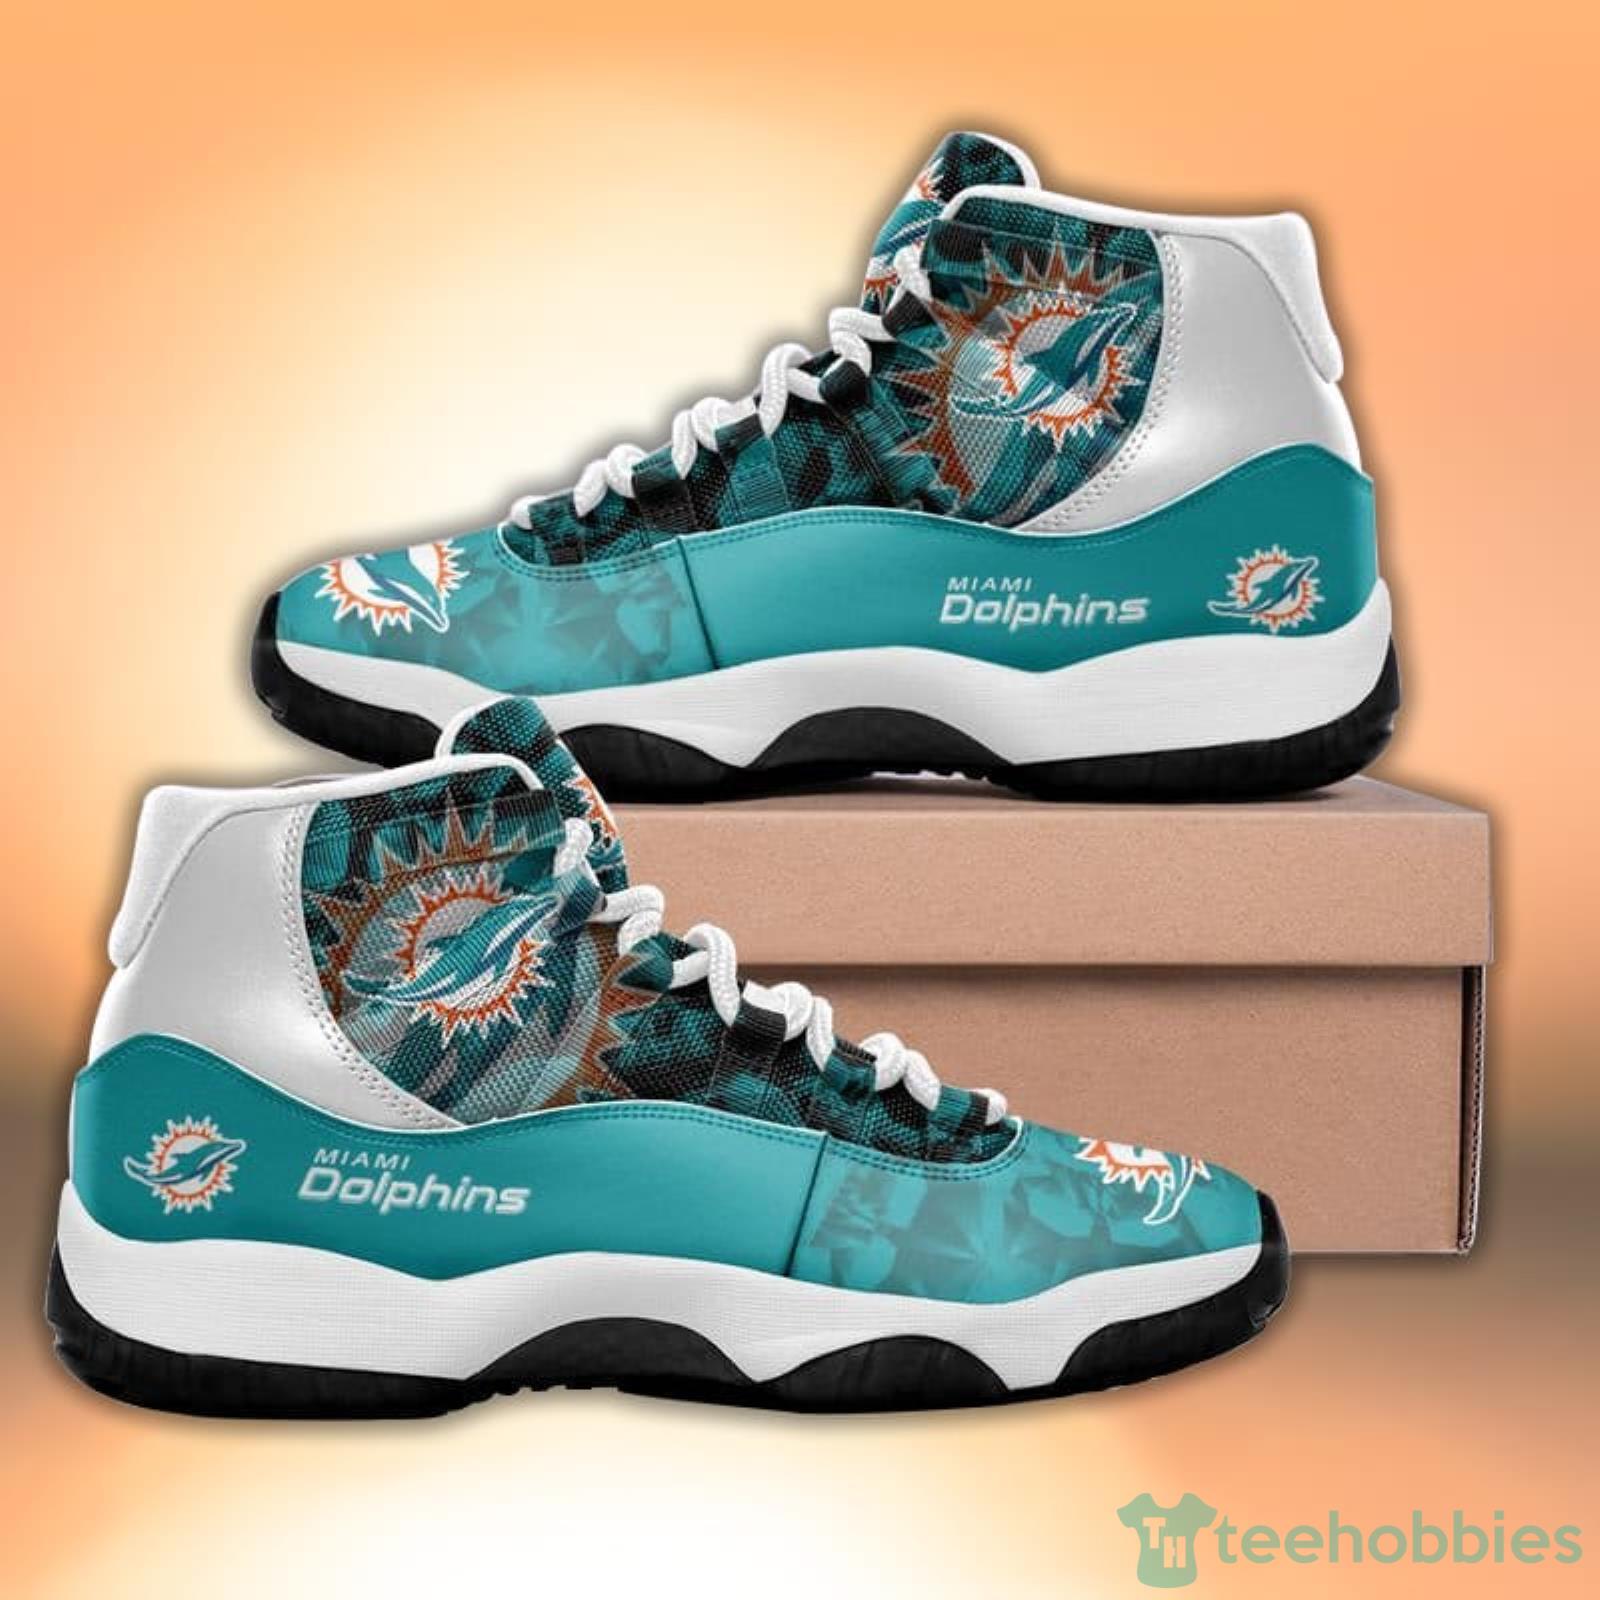 Miami Dolphins Skull Pattern Style Sneaker Air Jordan 11 Shoes